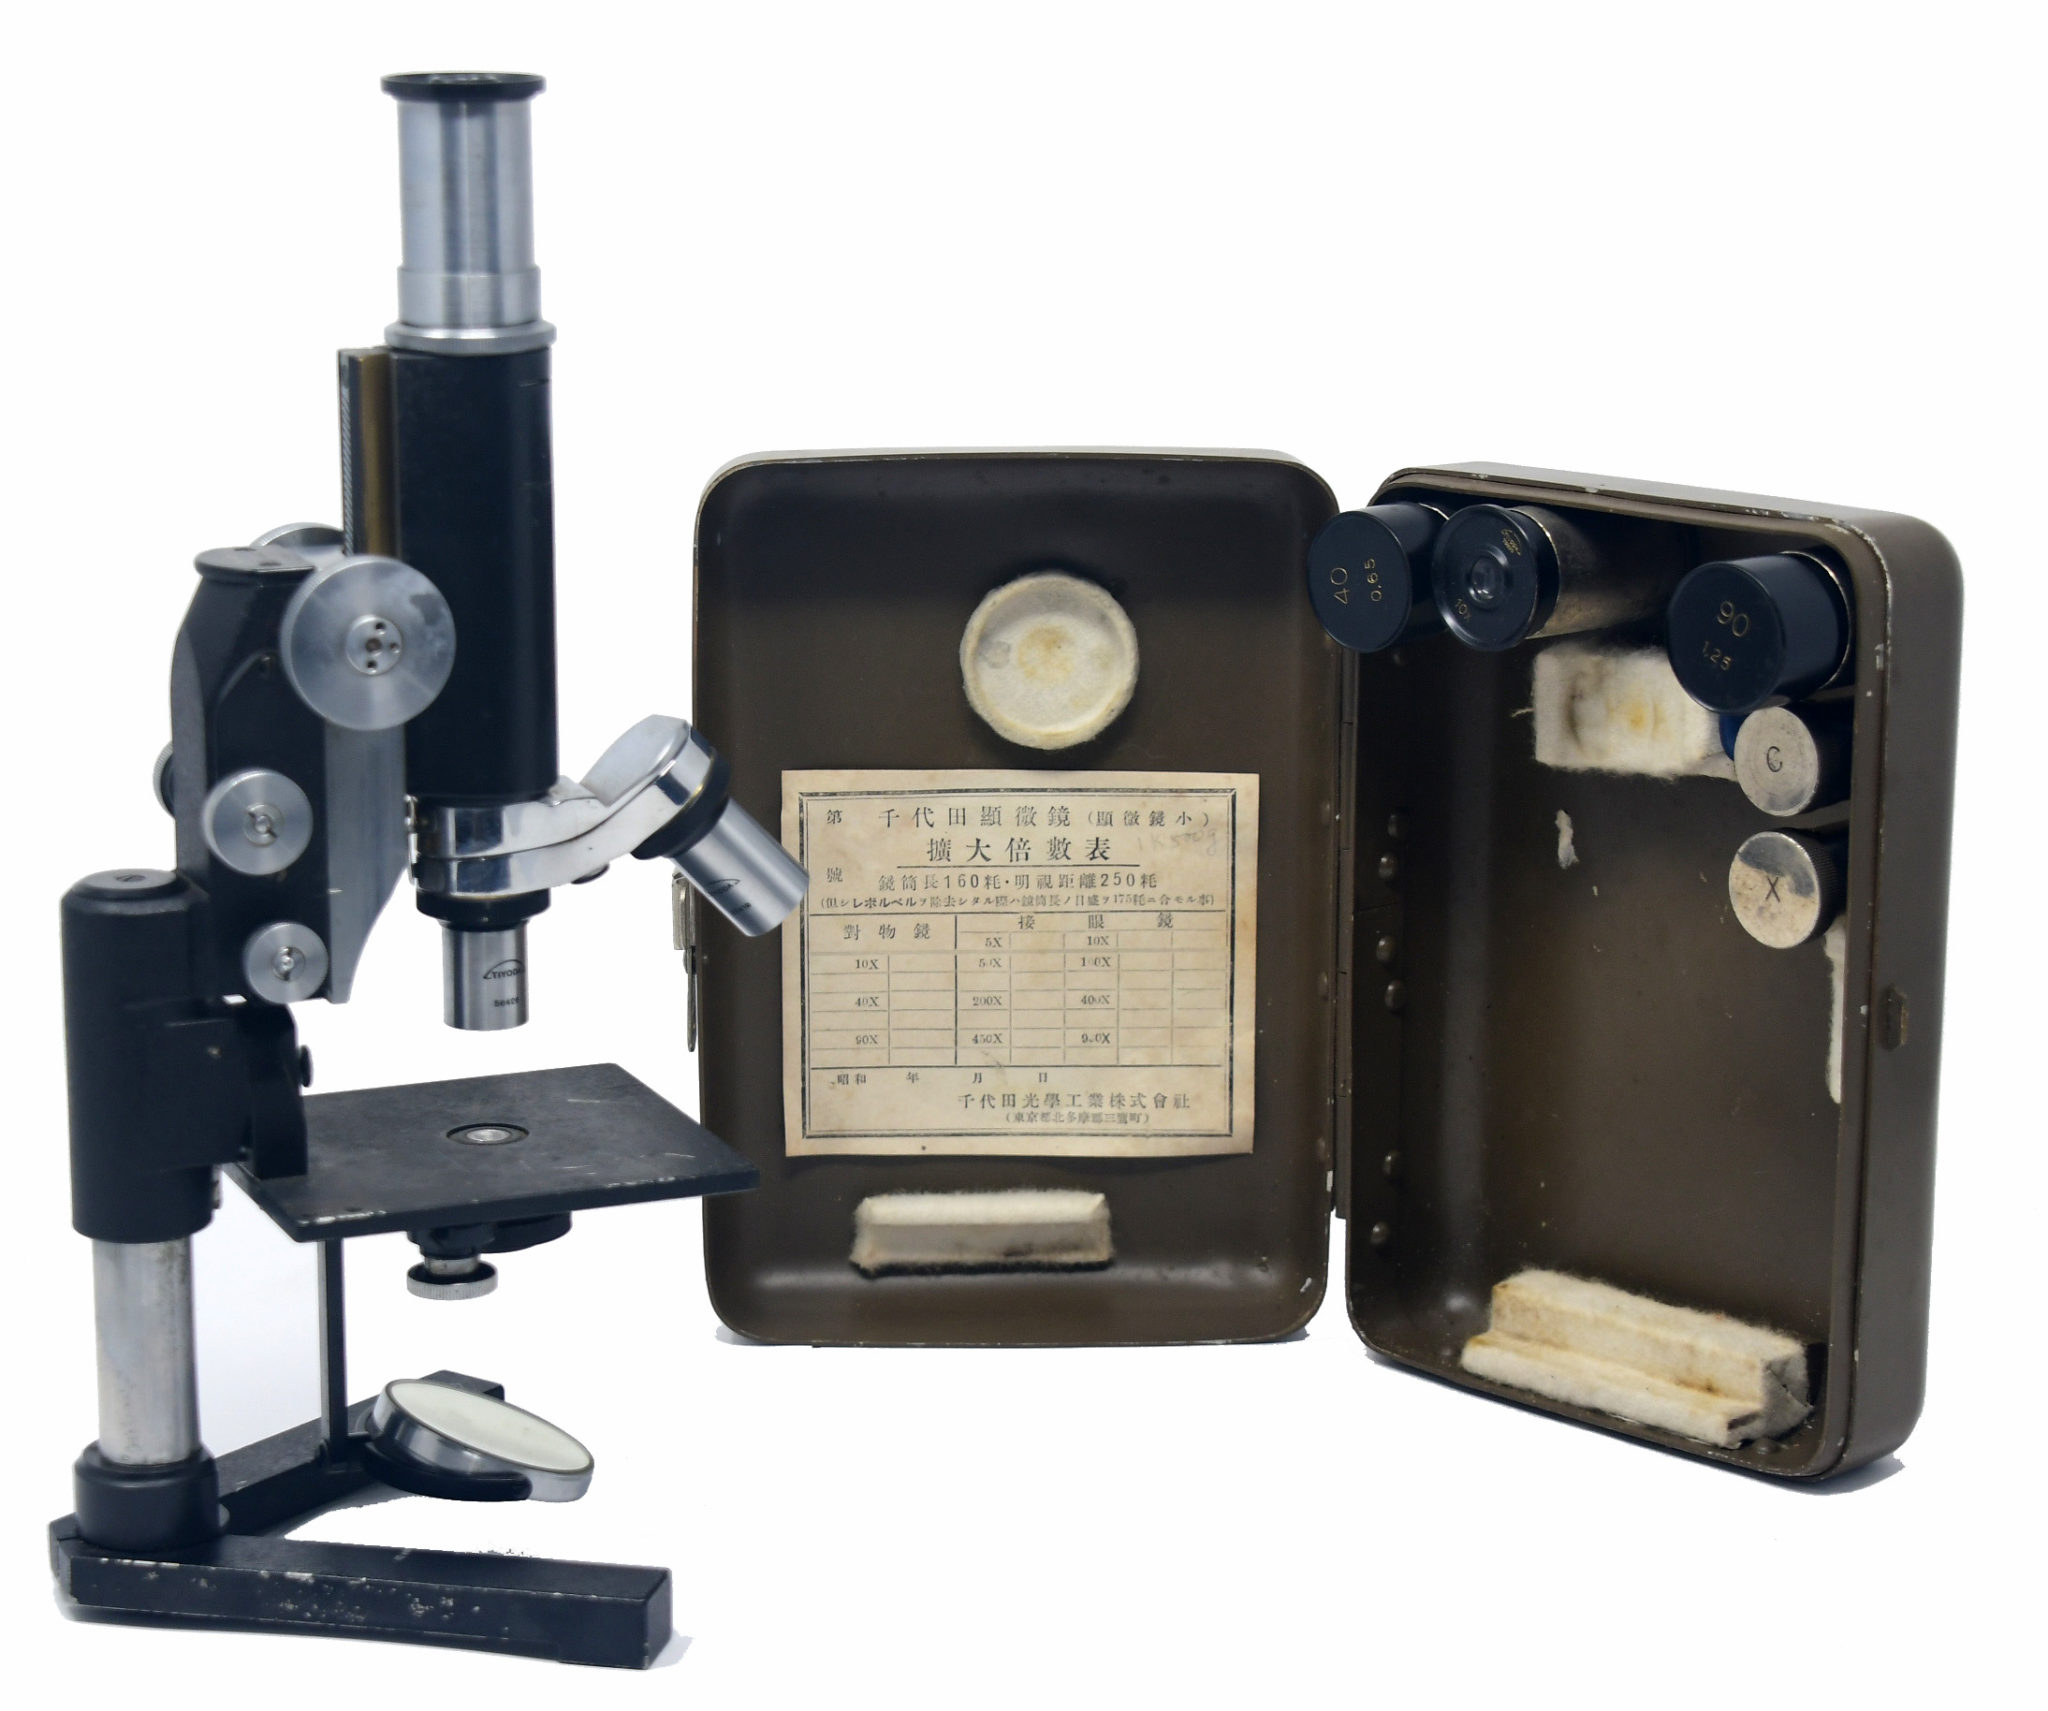 Tioyda MKH (3rd series) Japanese Army Field Hospital Microscope, 1945